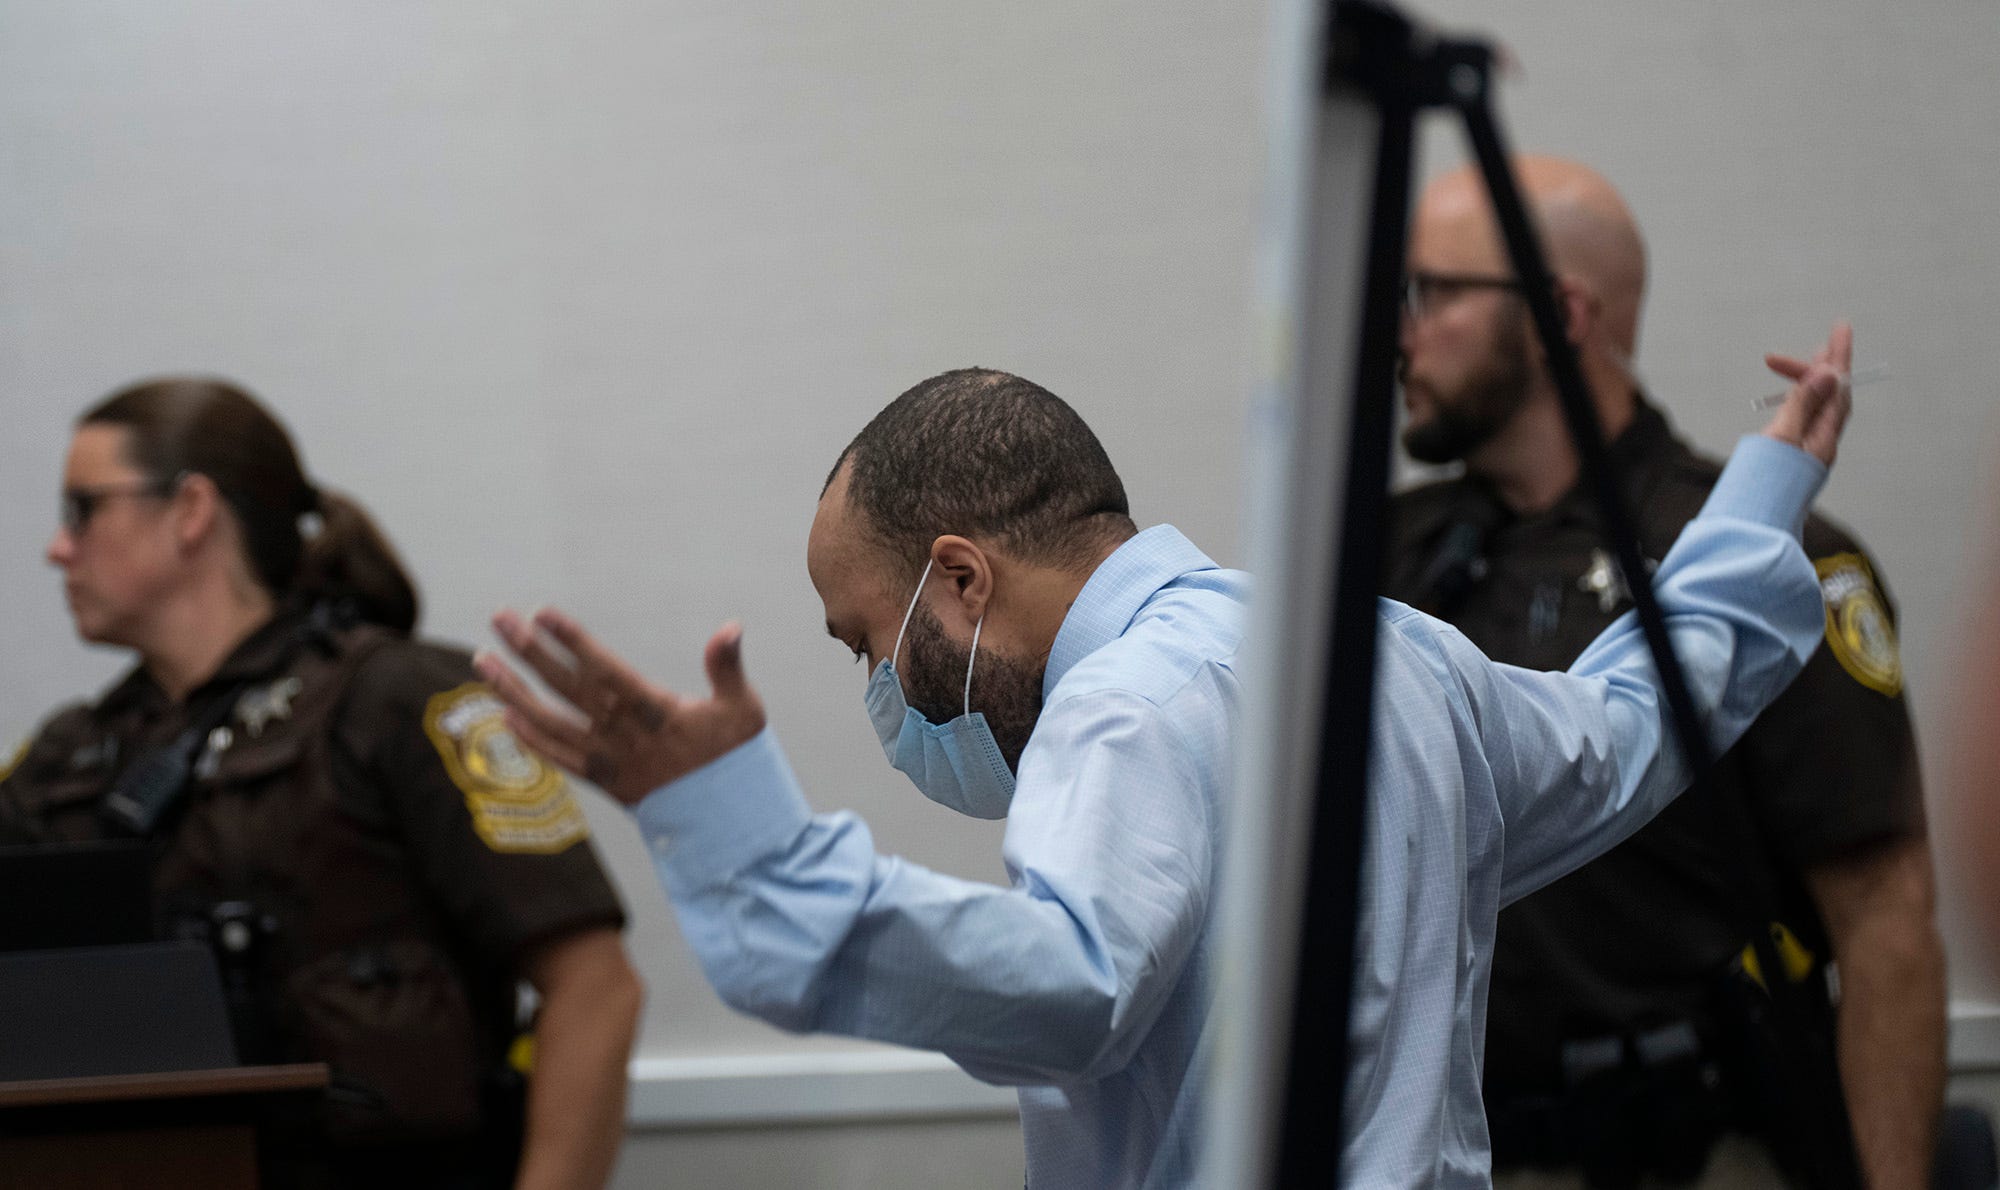 Darrell Brooks trial live stream closing arguments in Waukesha attack